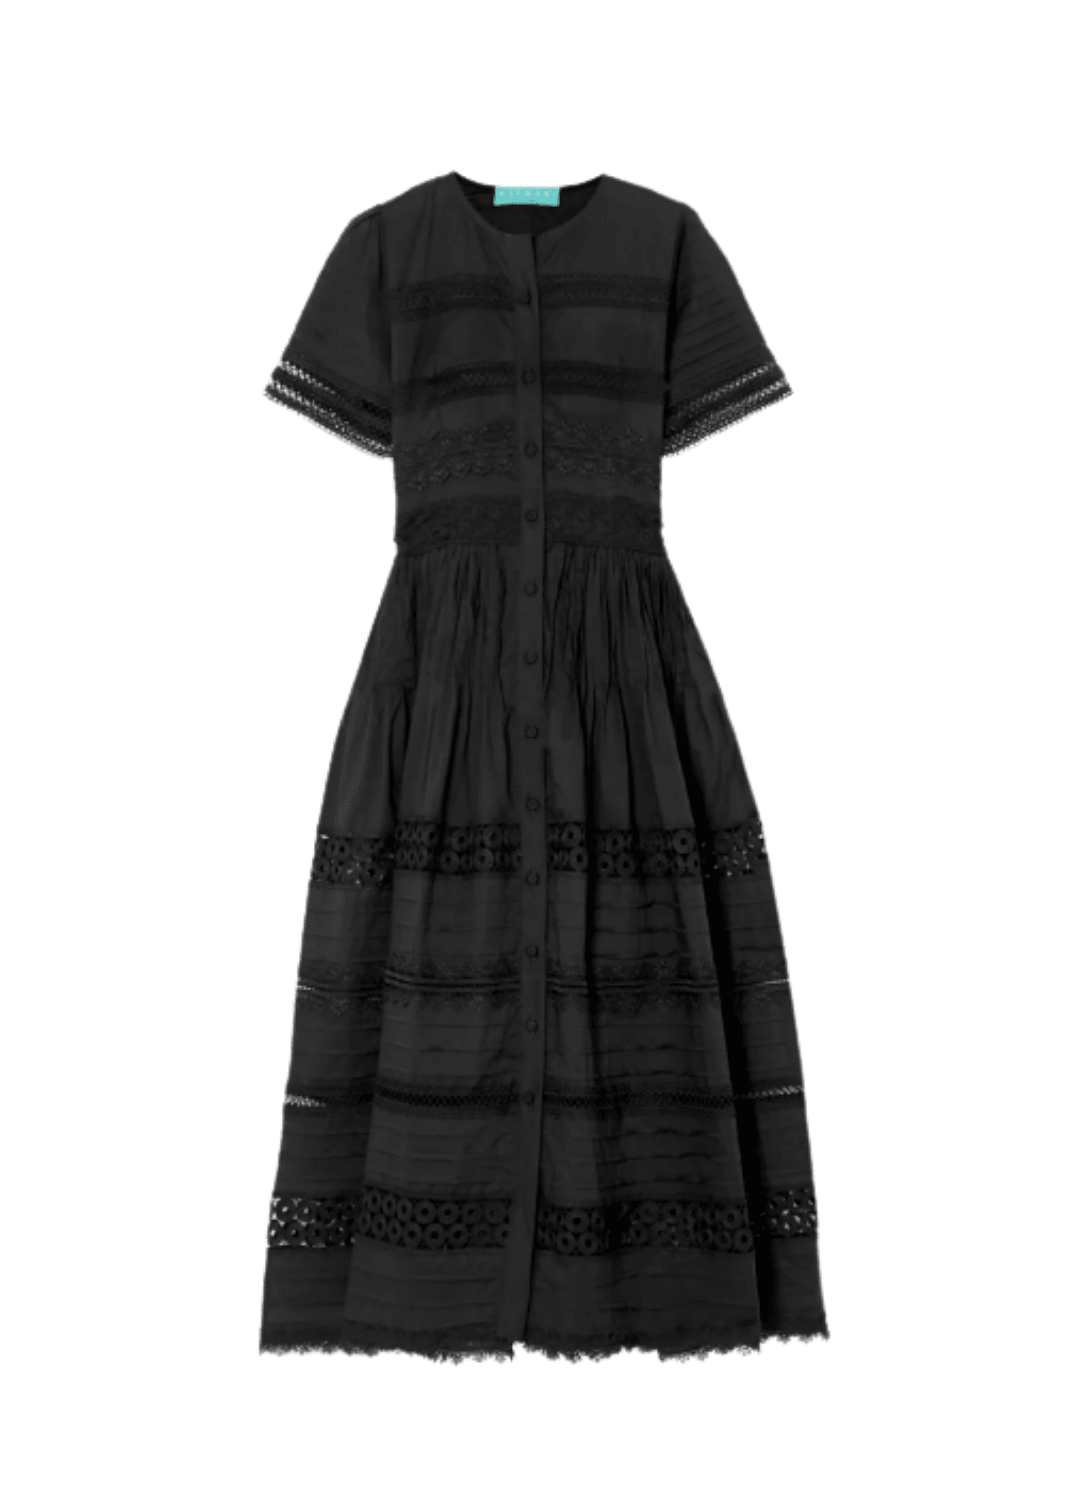 WAIMARI CAMILA DRESS BLACK – WAIMARI RESORTWEAR